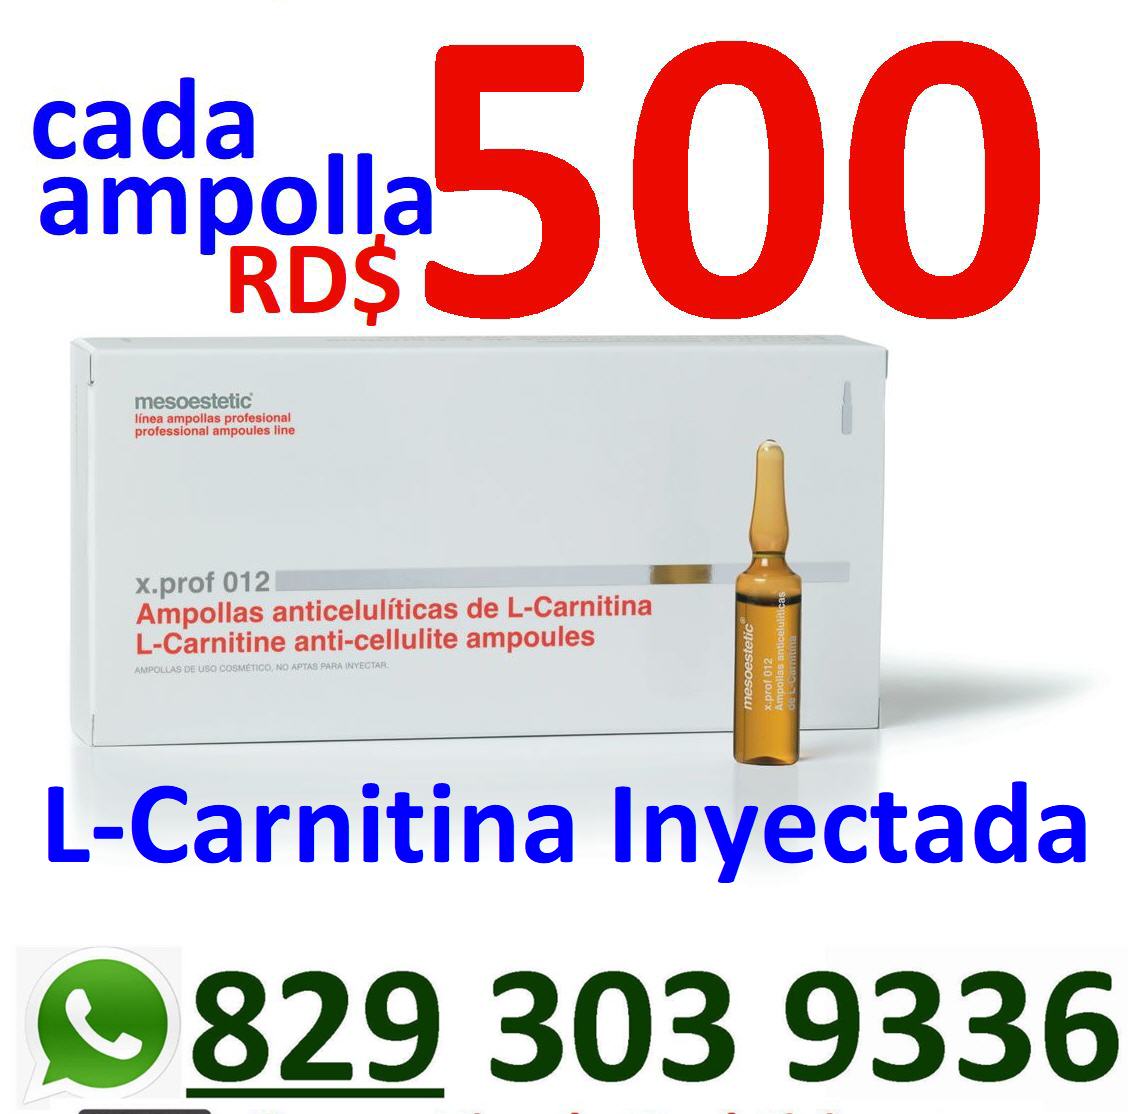 L Carnitina l-carnitine carnitine mesoestetic inyectada aplicaciones q Foto 7210482-1.jpg